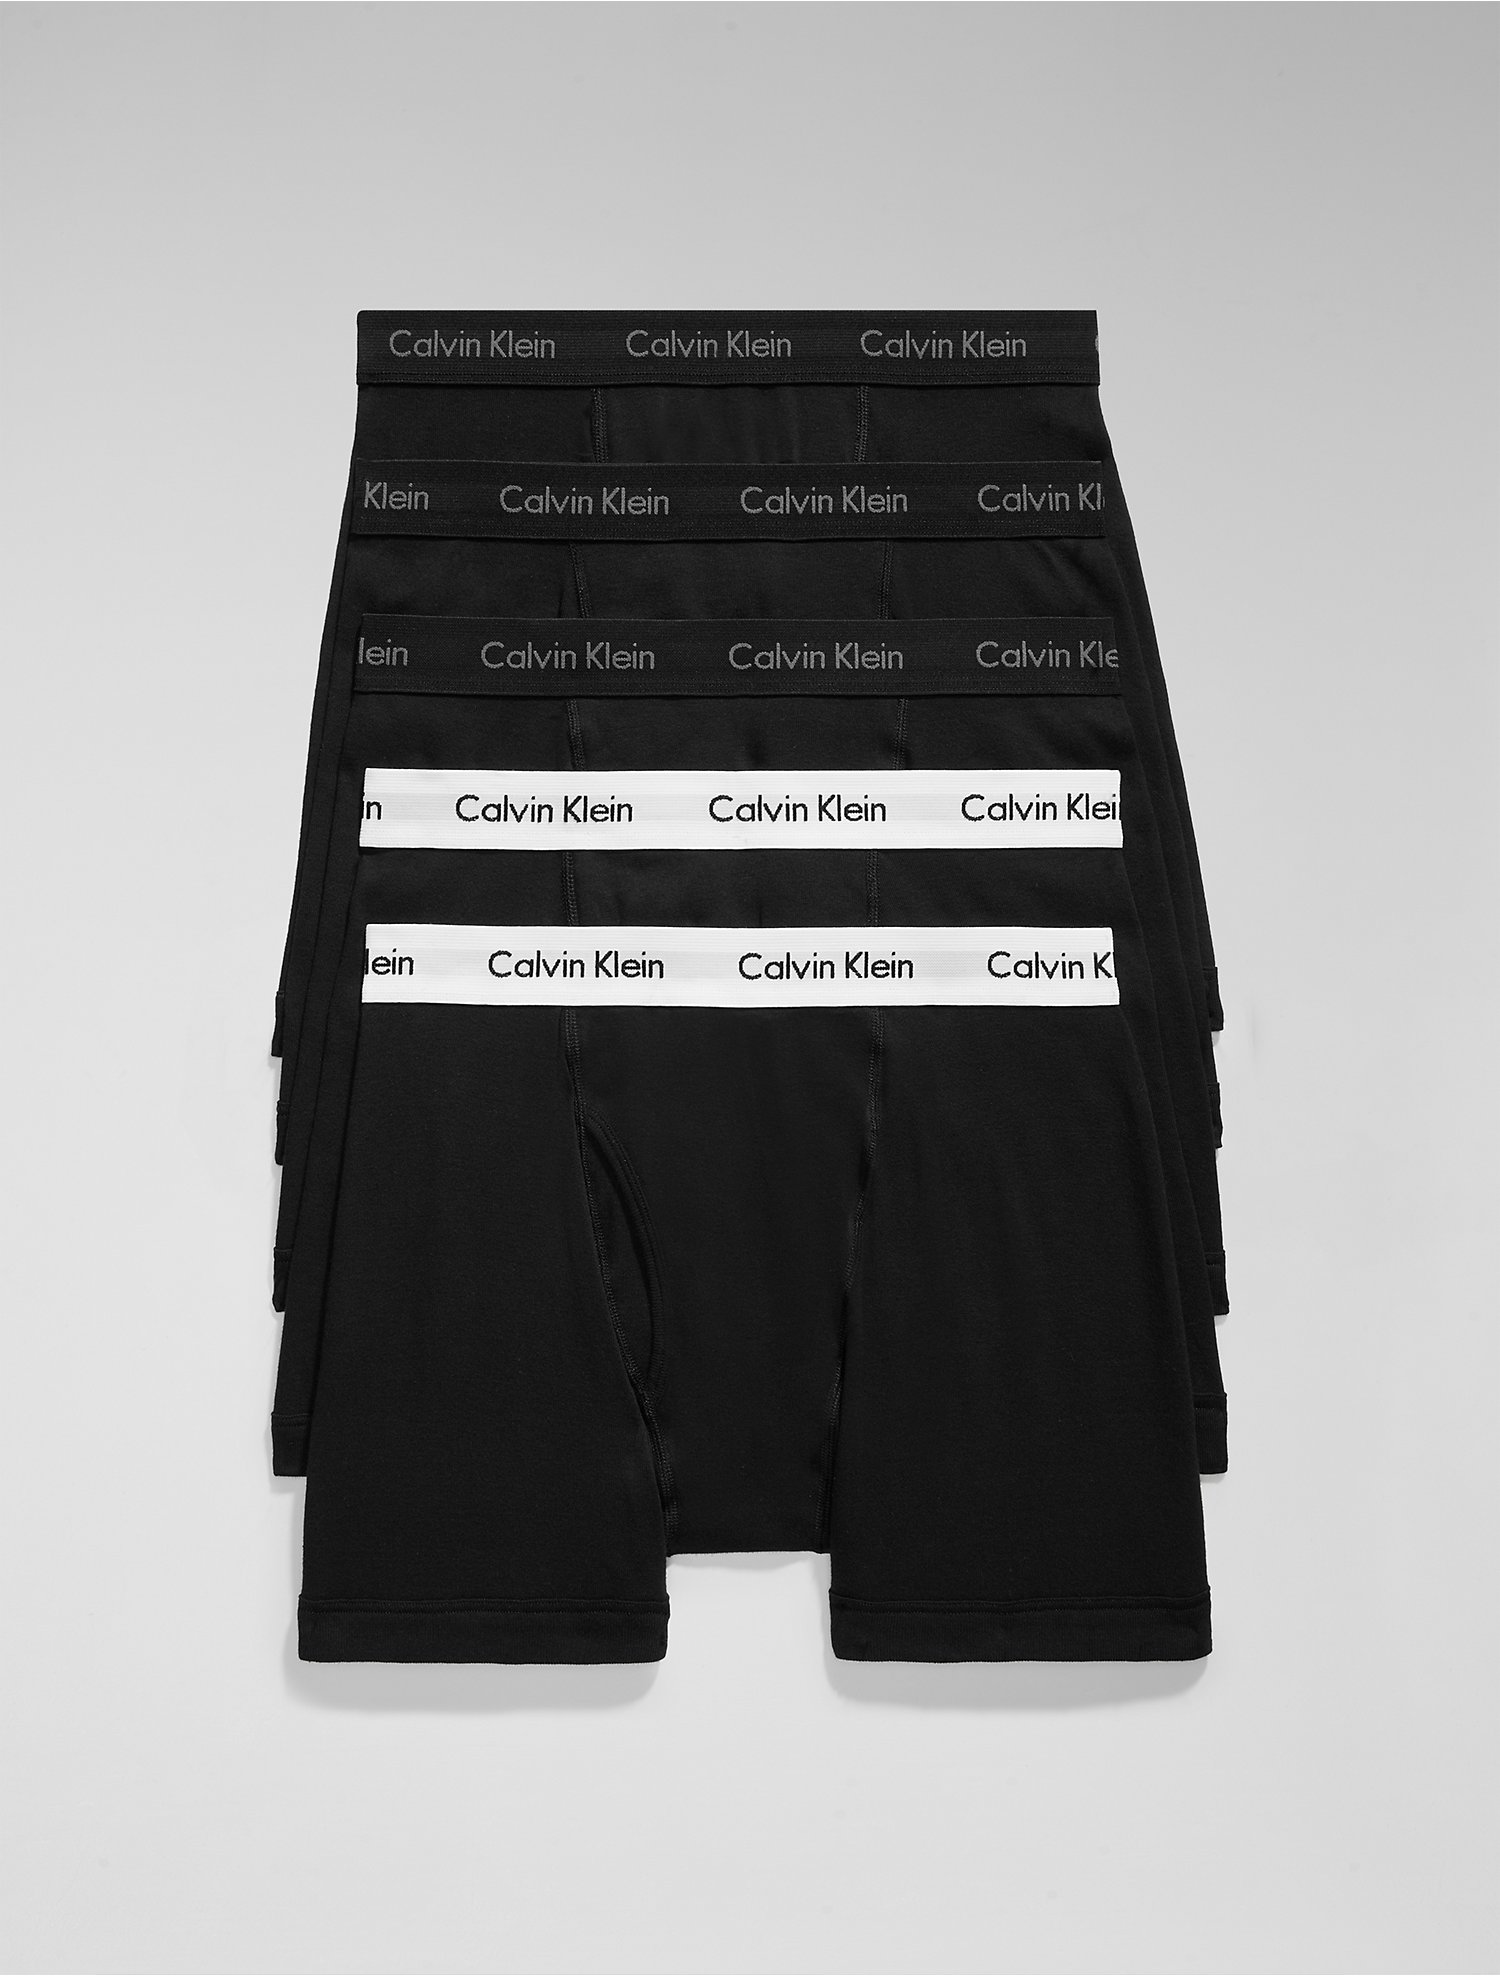 Gloed jeans Investeren Cotton Classics 5-Pack Boxer Brief | Calvin Klein